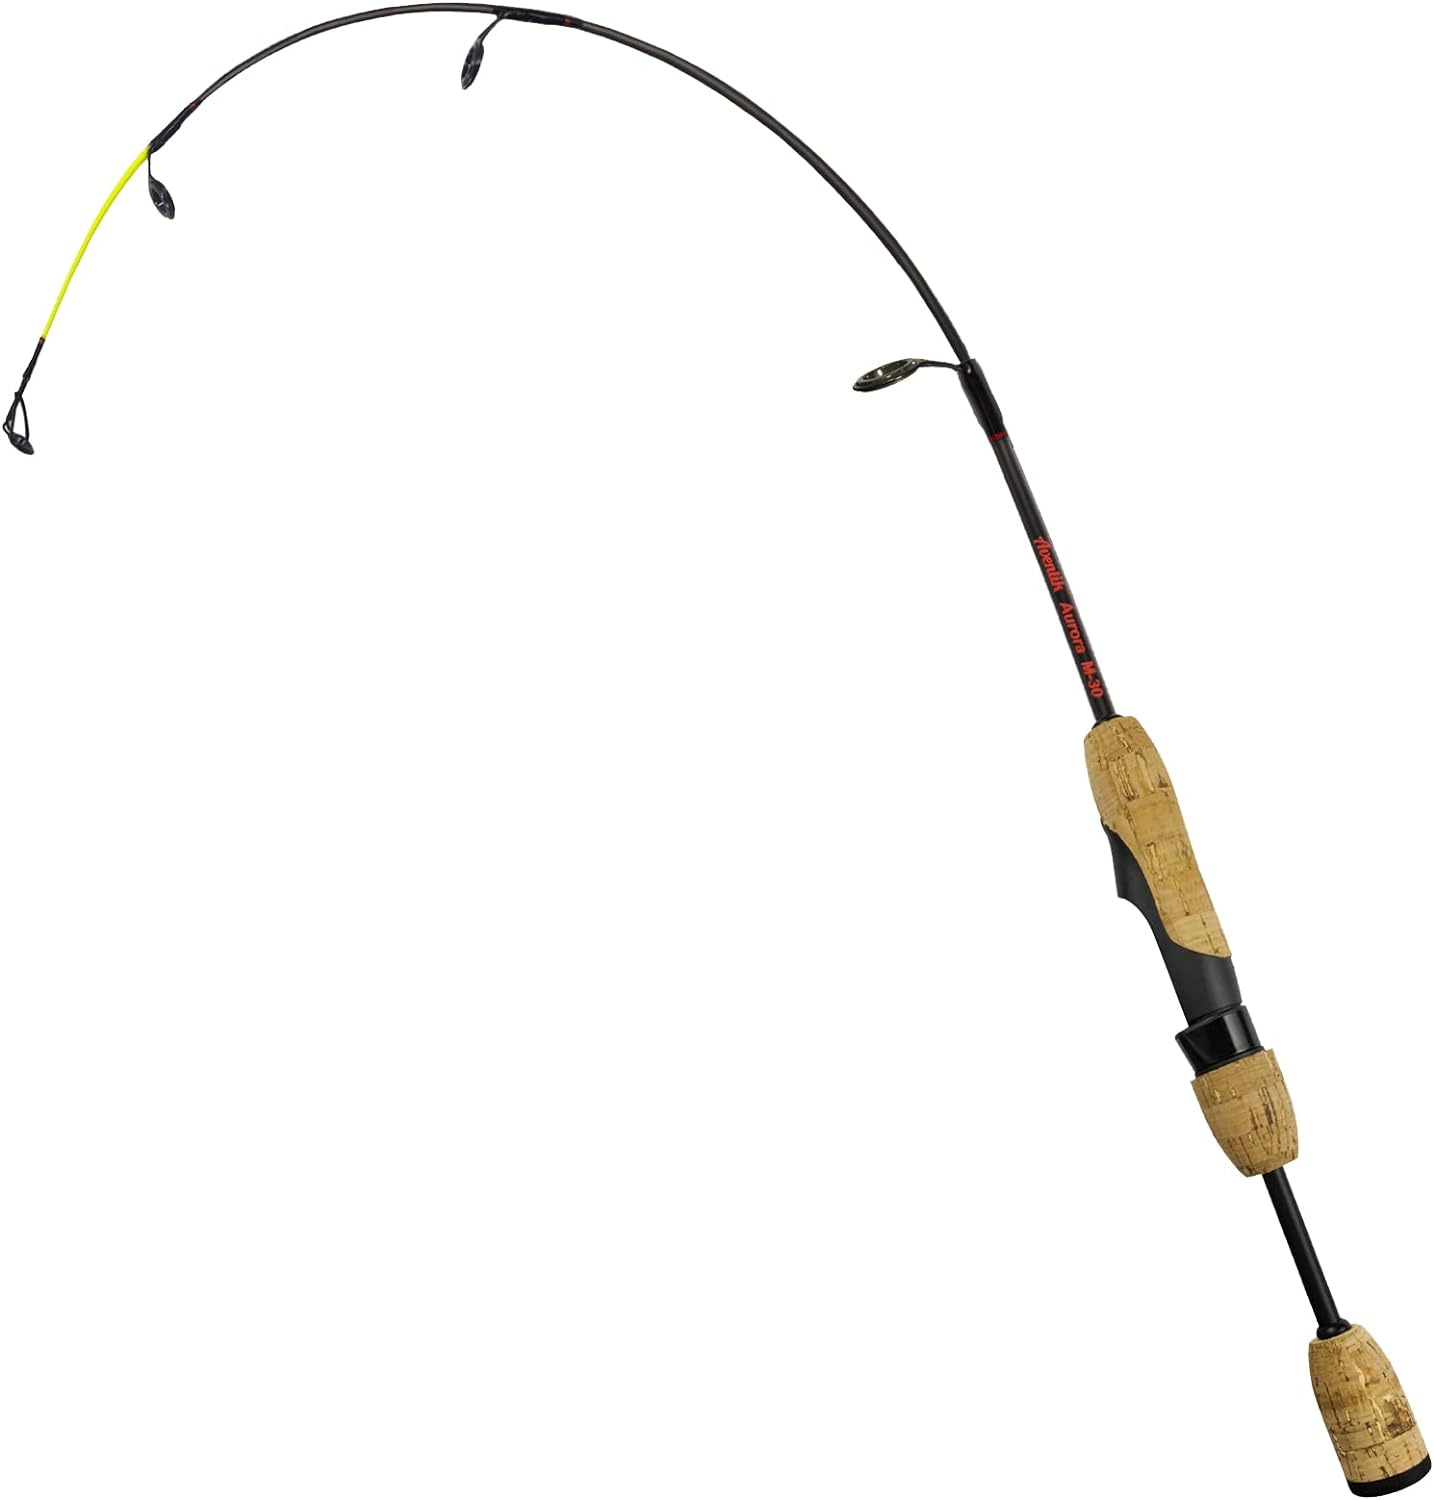 MoonStik - Fishing Rod Light for Serious Night Fishing! 